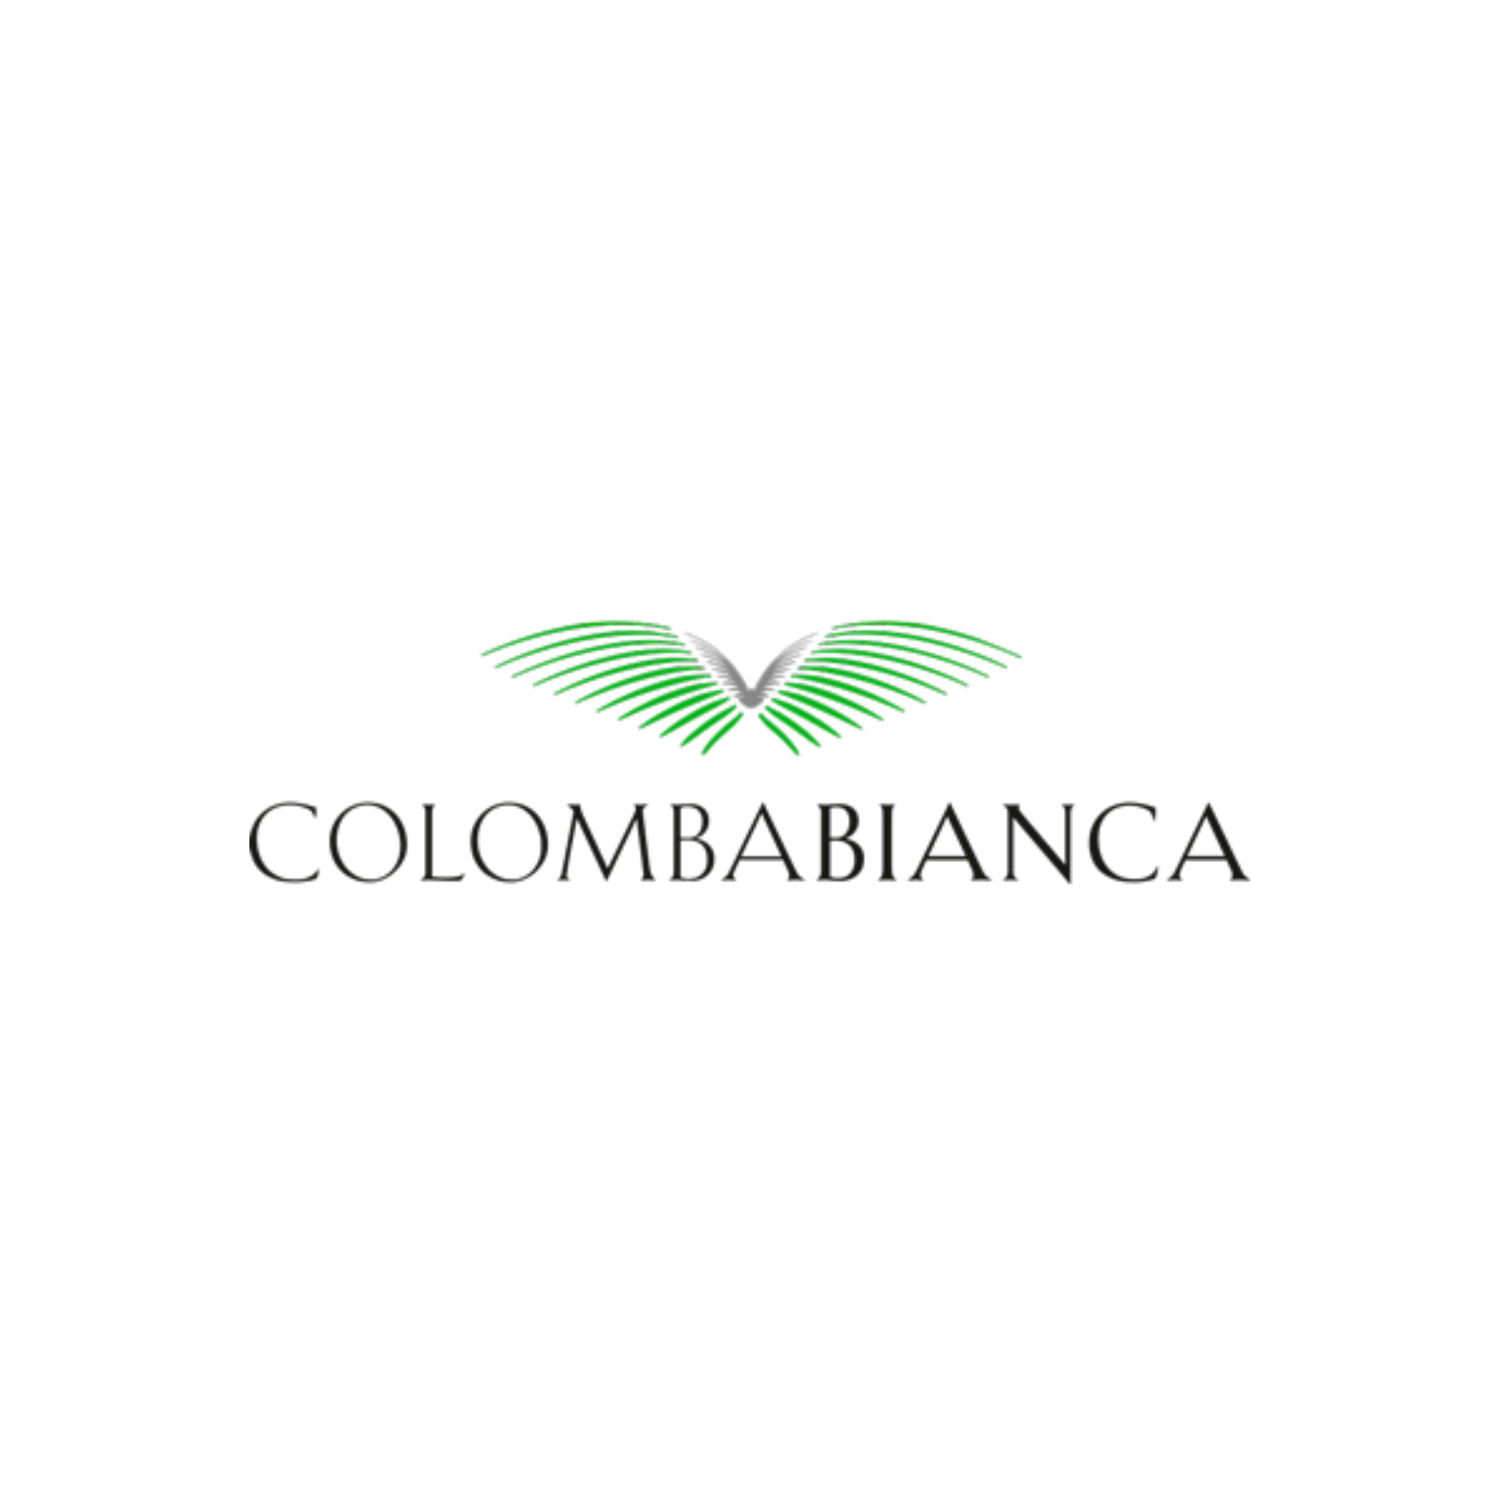 COLOMBA BIANCA - VITESE